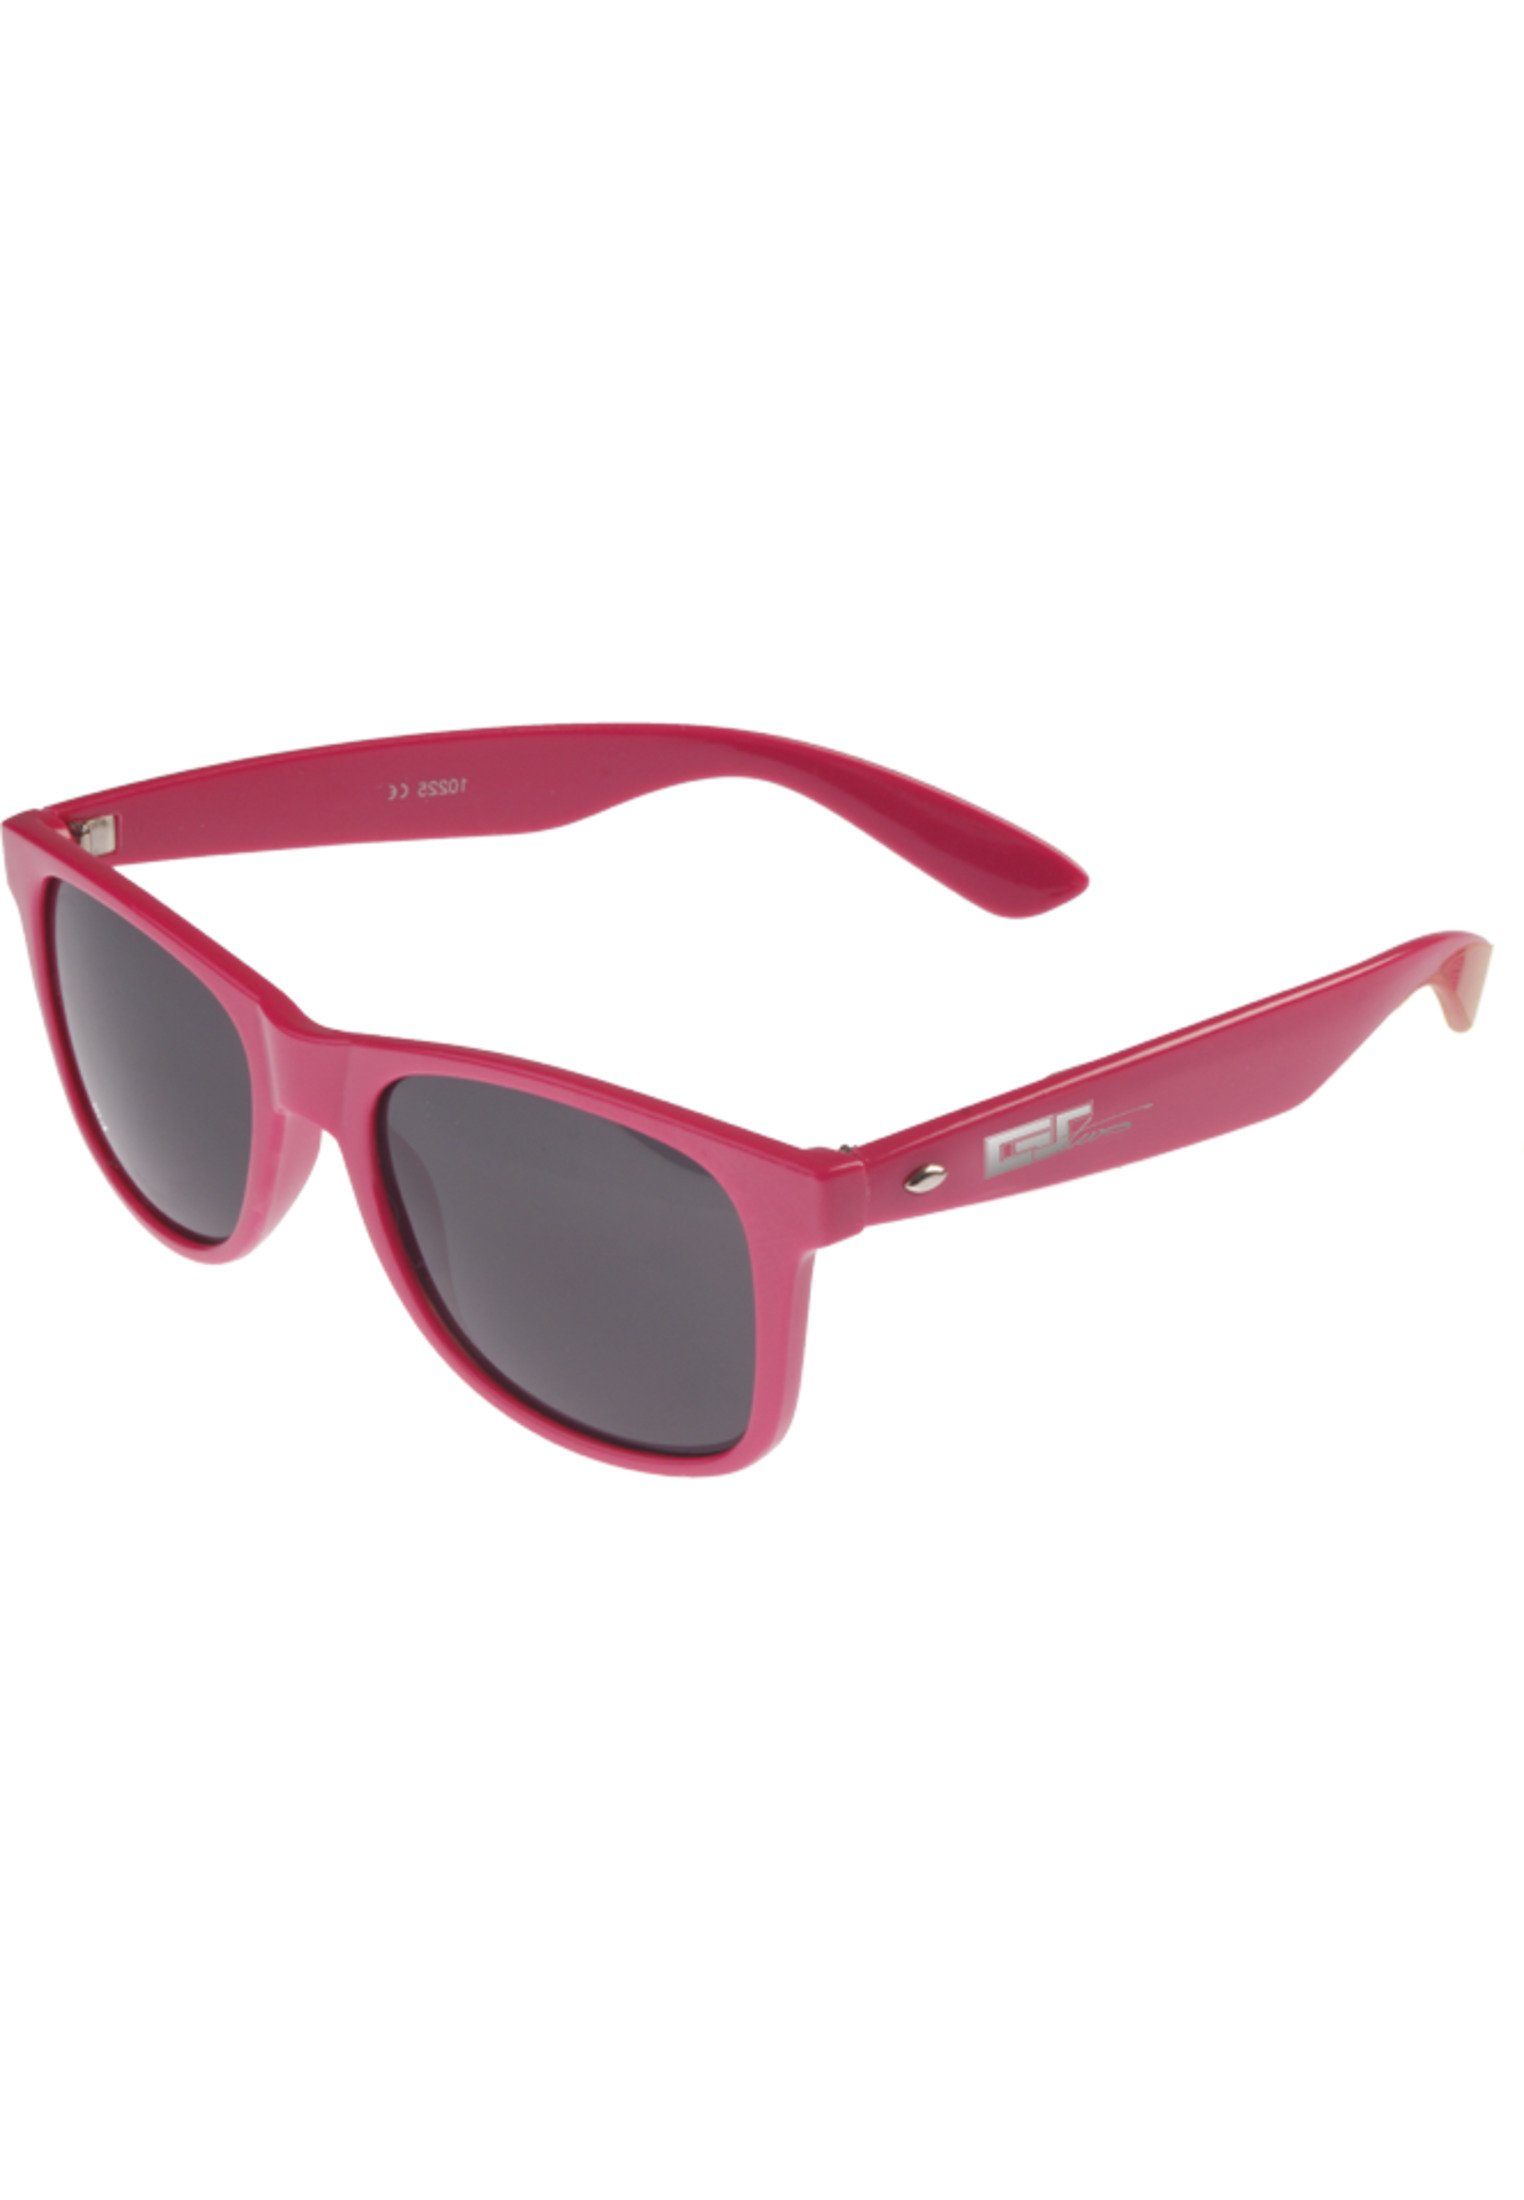 MSTRDS Sonnenbrille Accessoires Groove Shades GStwo magenta | Sonnenbrillen